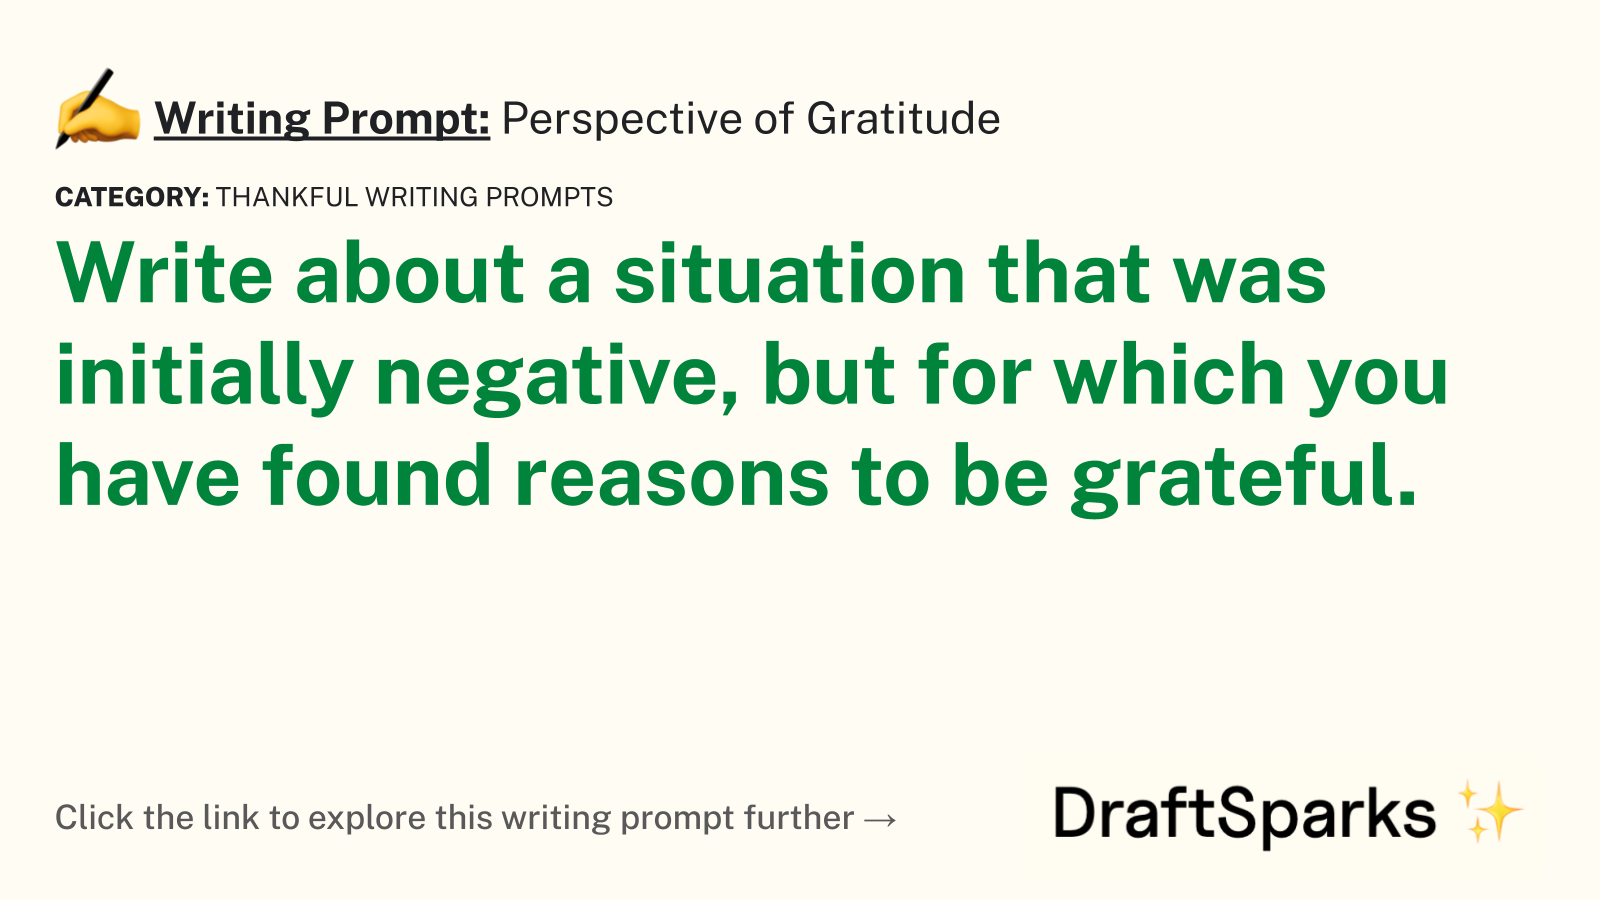 Perspective of Gratitude